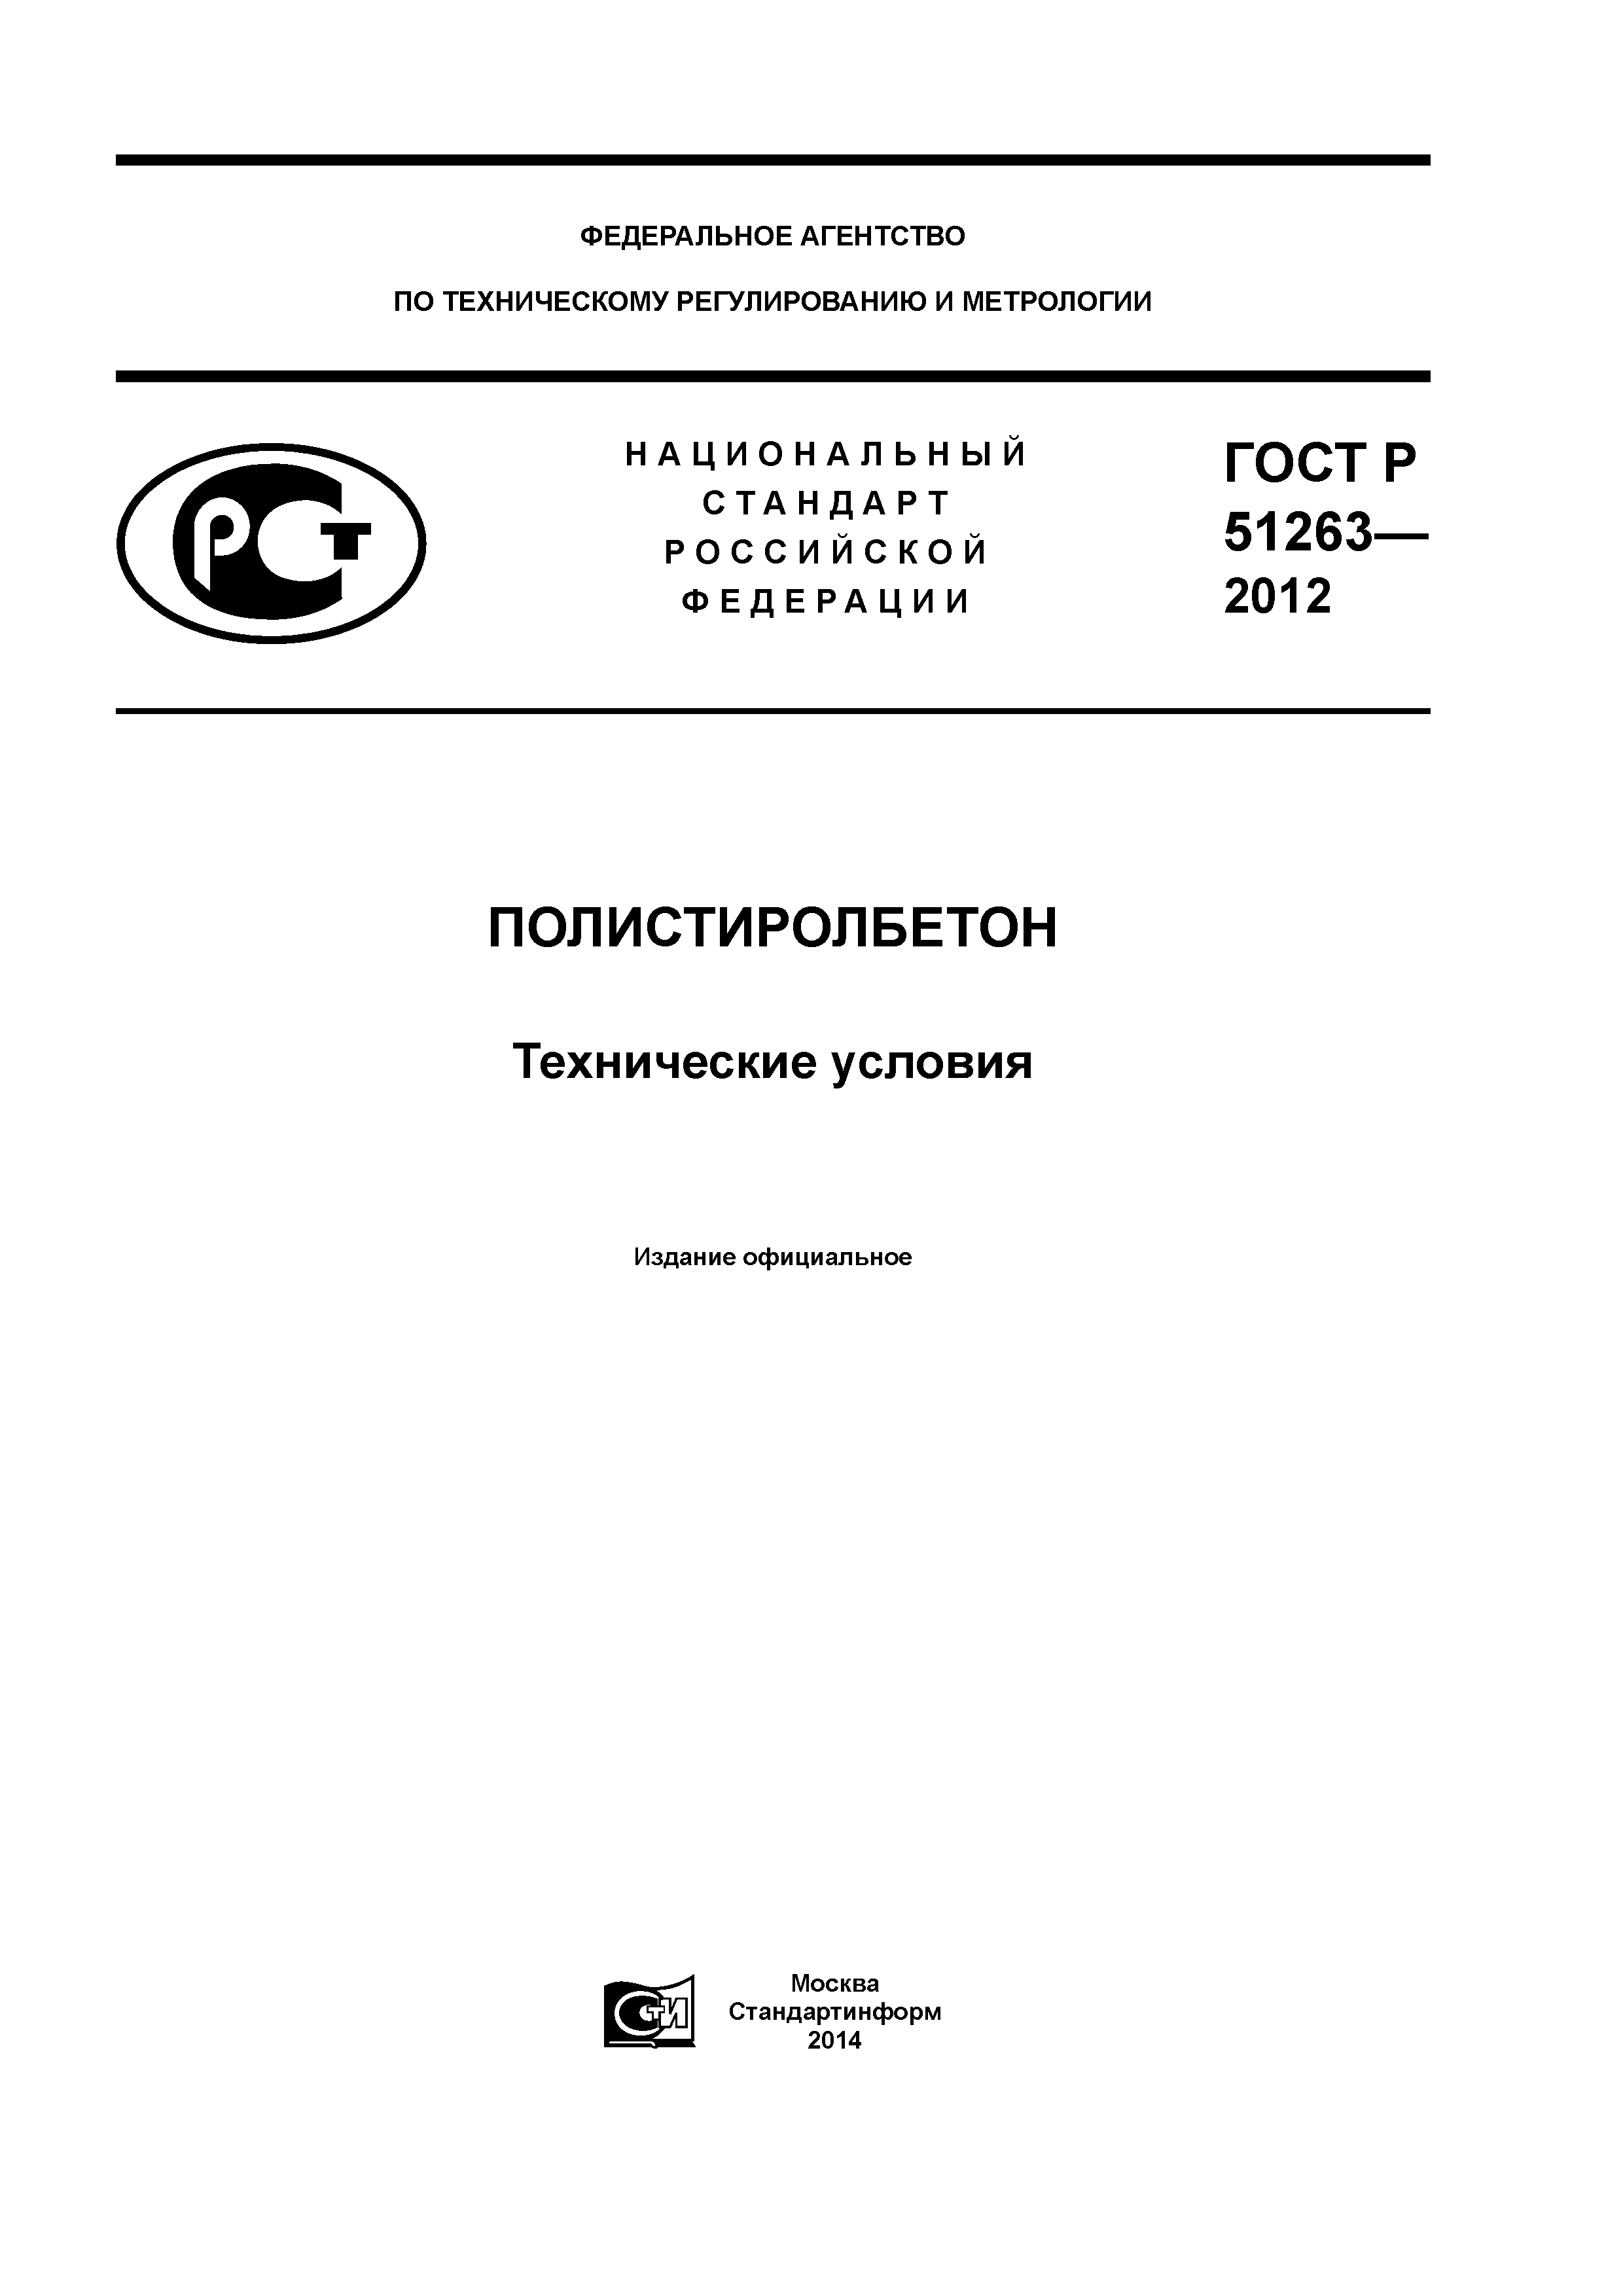 ГОСТ Р 51263-2012